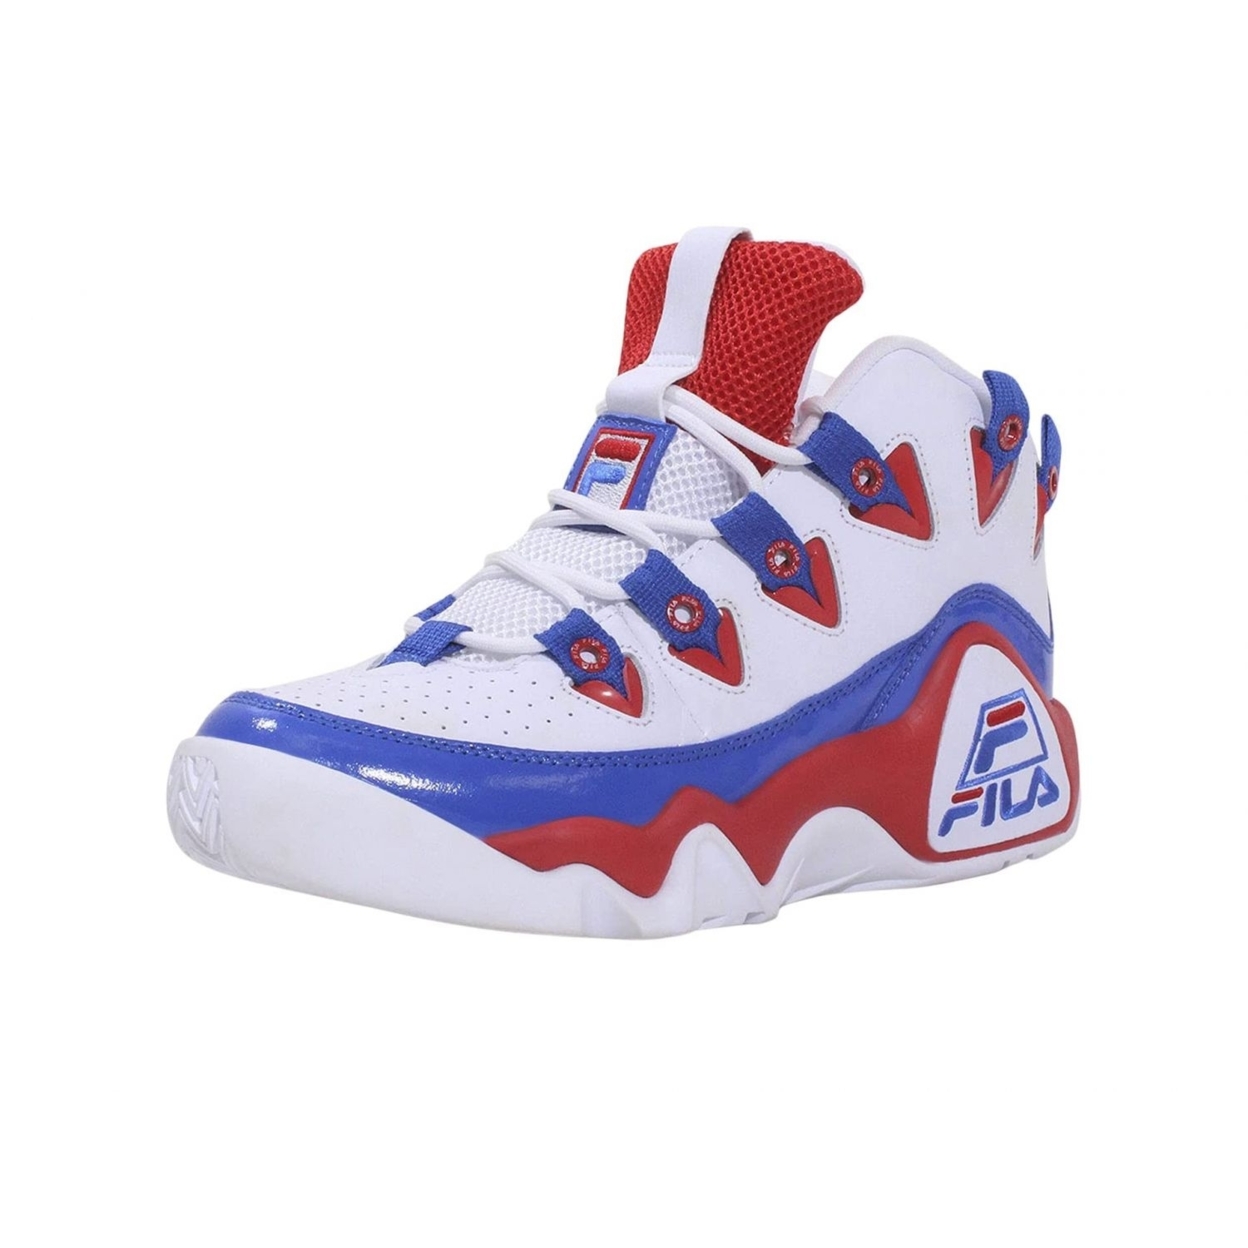 Fila Men's Grant Hill 1 Sneaker 7-15 White / Fila Red / Prince Blue - White / Fila Red / Prince Blue, 9.5